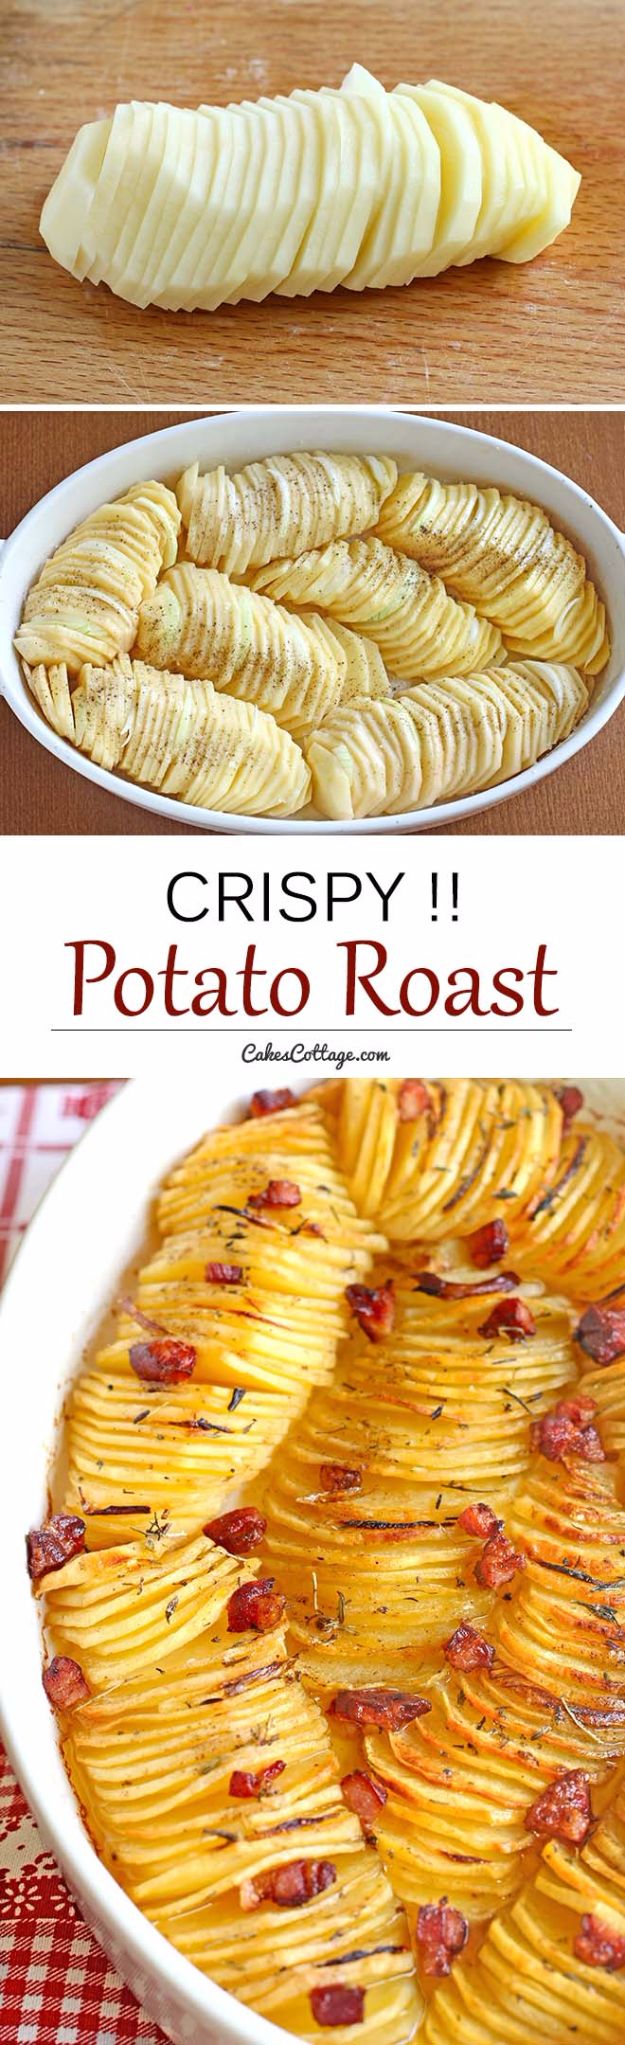 Potato Recipes - Crispy Potato Roast - Easy, Quick and Healthy Potato Recipes - How To Make Roasted, In Oven, Fried, Mashed and Red Potatoes - Easy Potato Side Dishes #potatorecipes #recipes